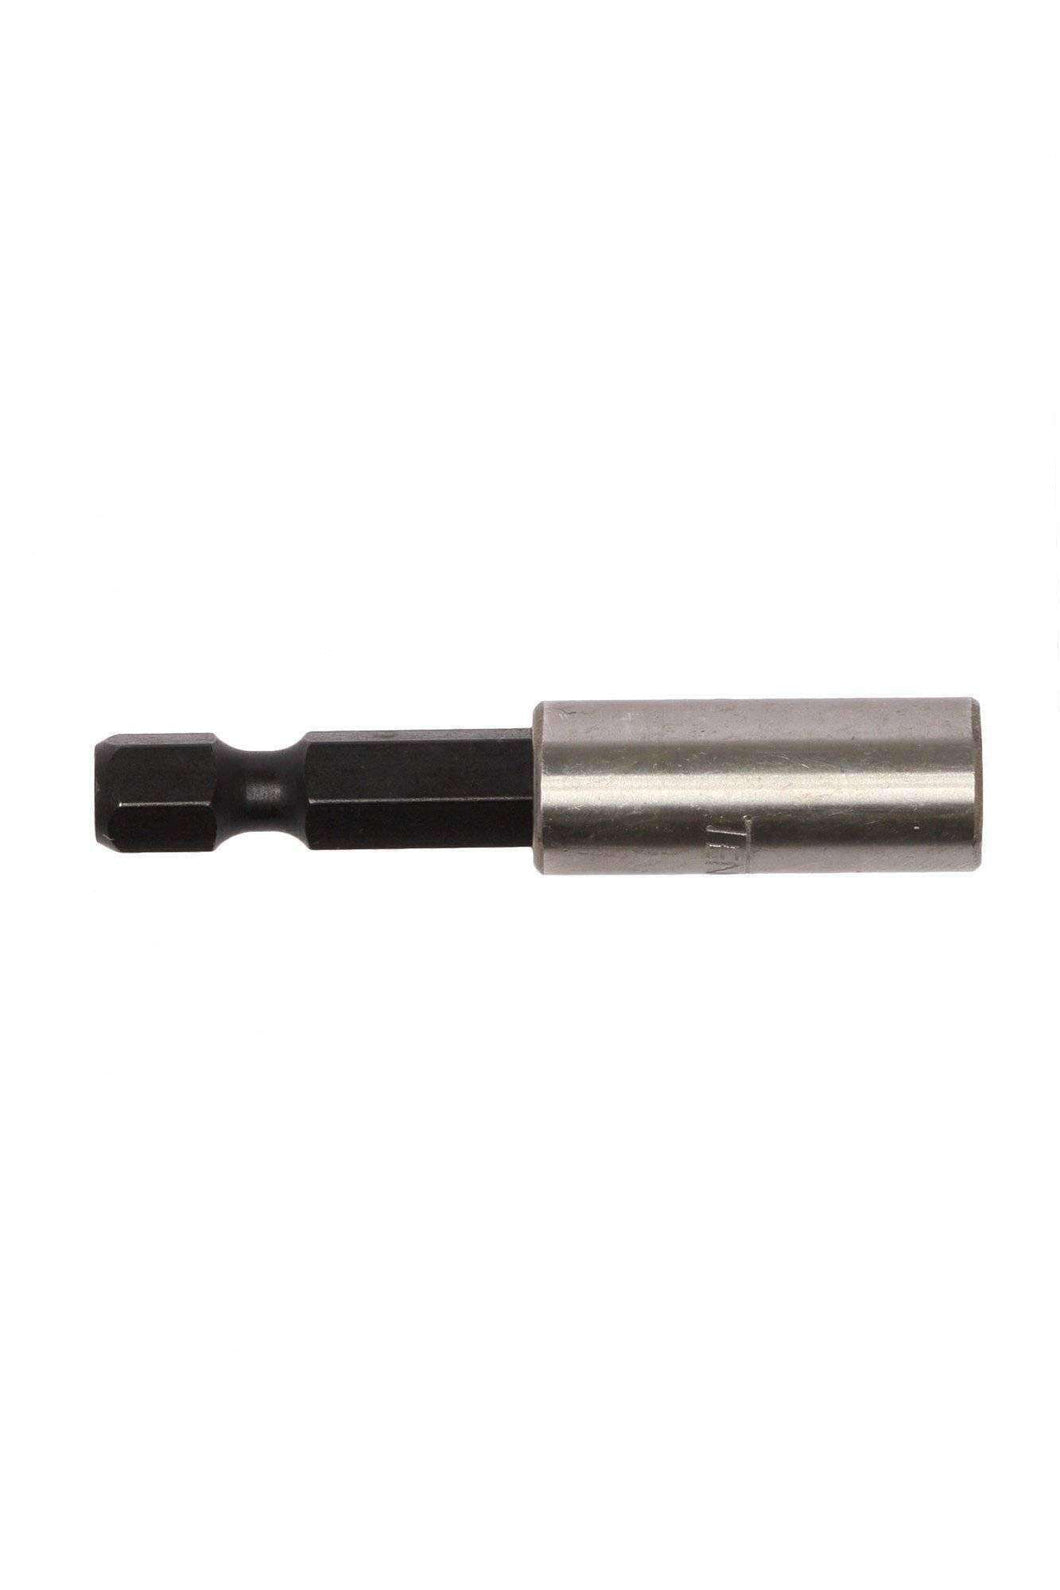 Teng Tools 1/4 Inch Drive Hex Drive 50mm Magnetic Bit Holder - ACC50MBH01